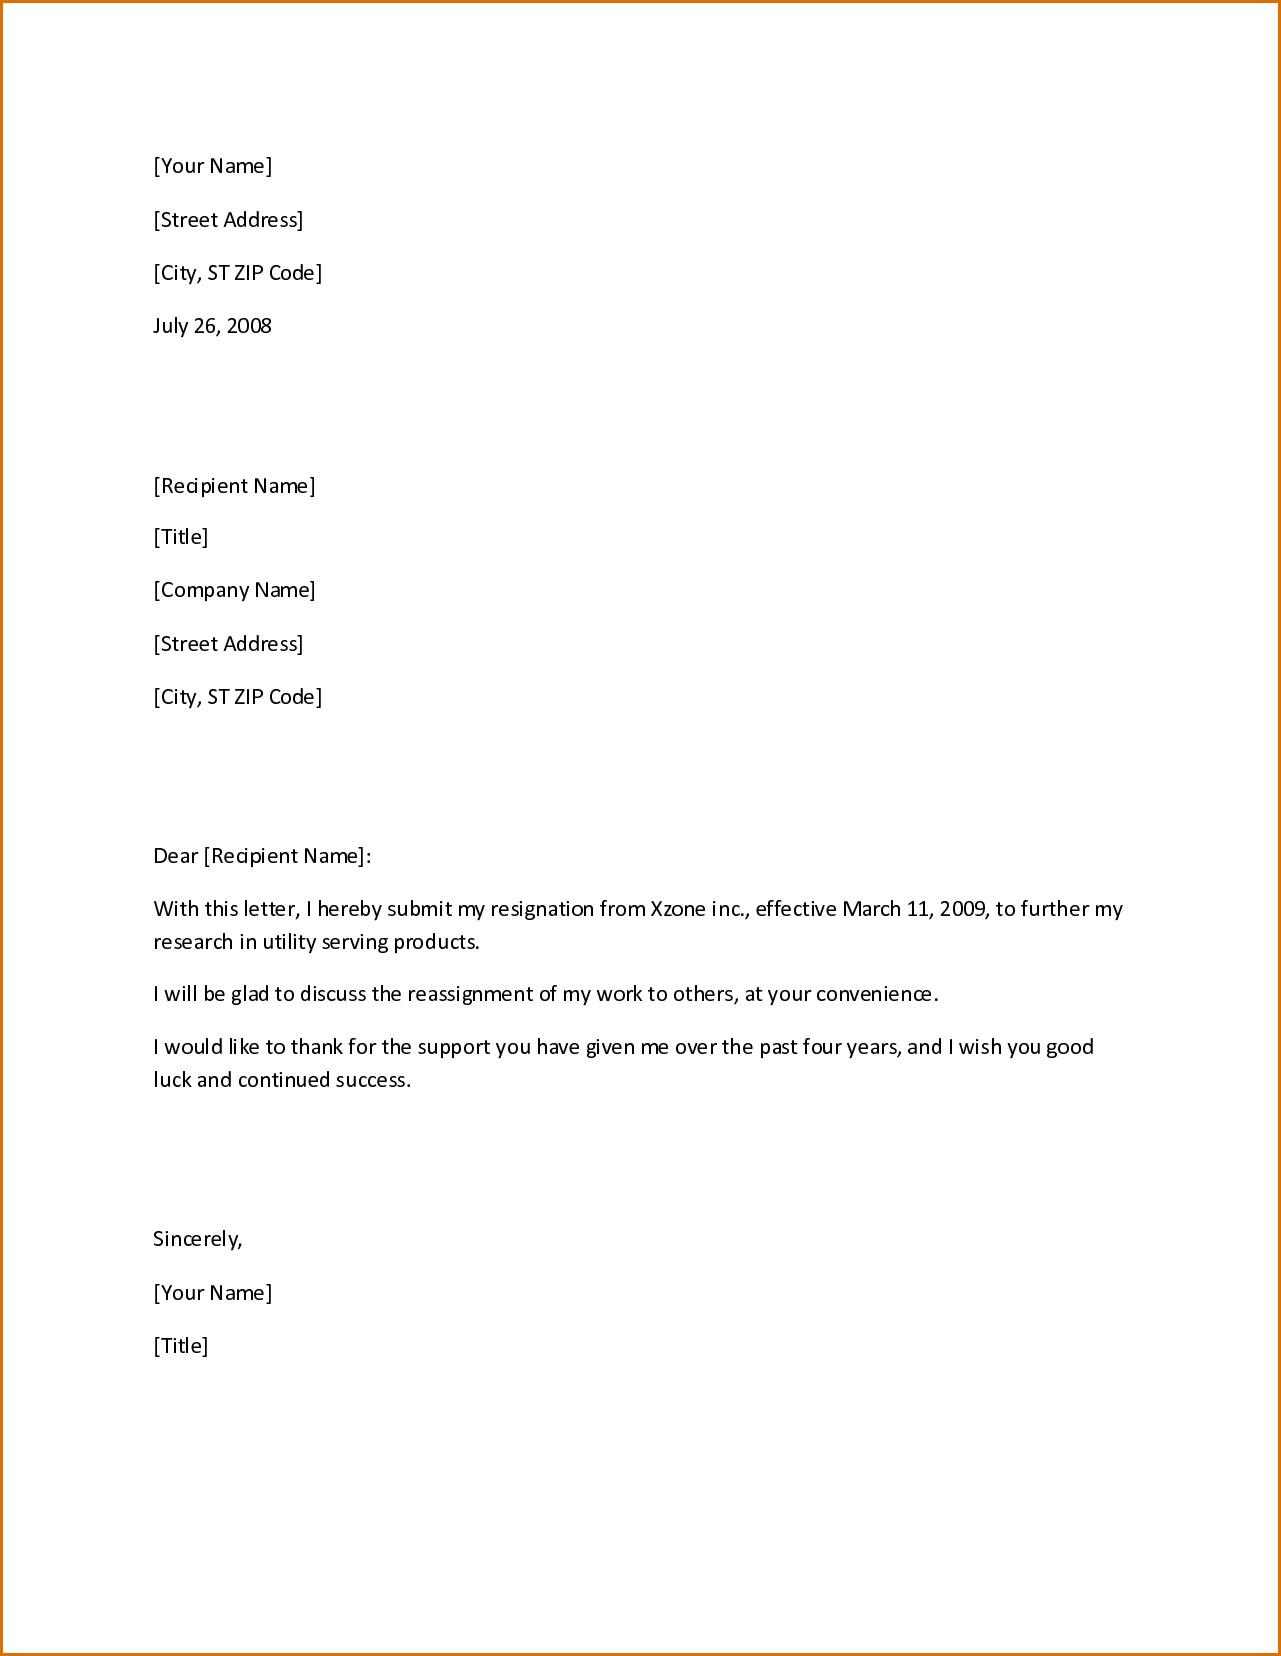 Resign letter sample doc professional resignation format best 